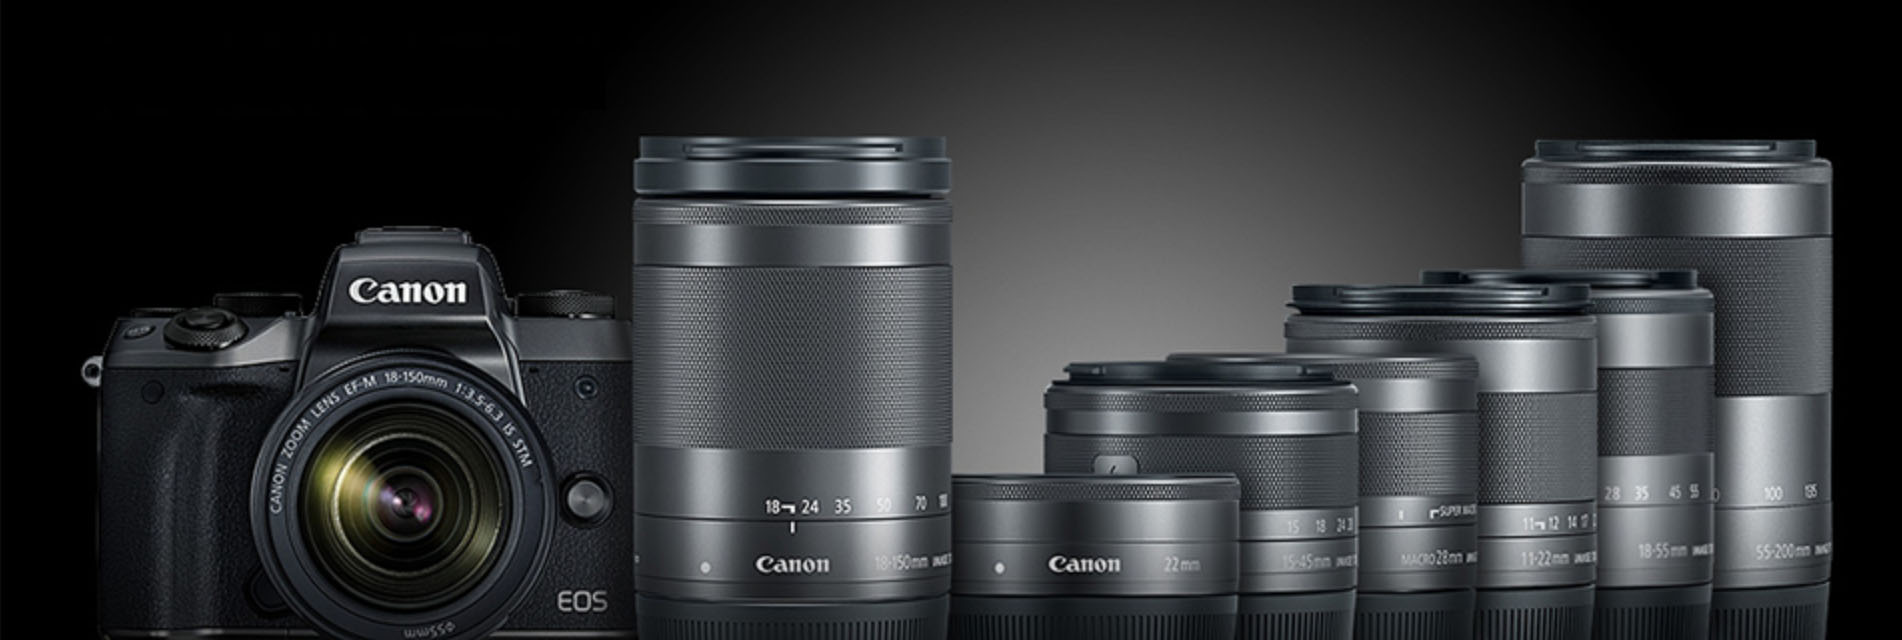 Dòng máy ảnh Canon EOS M Series